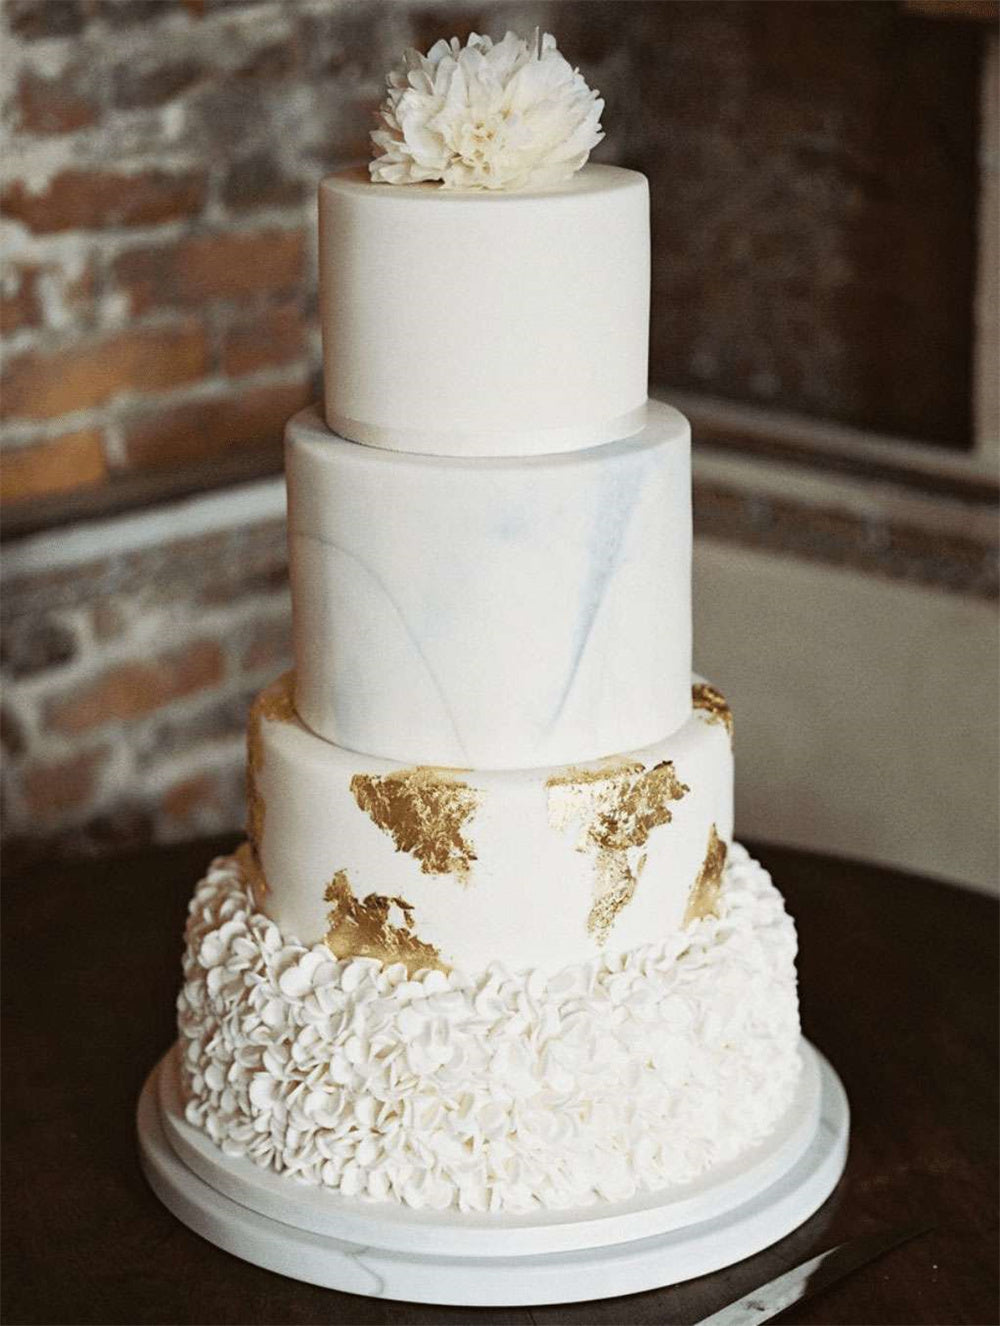 White Marble Wedding Cakes with Amazing Texture